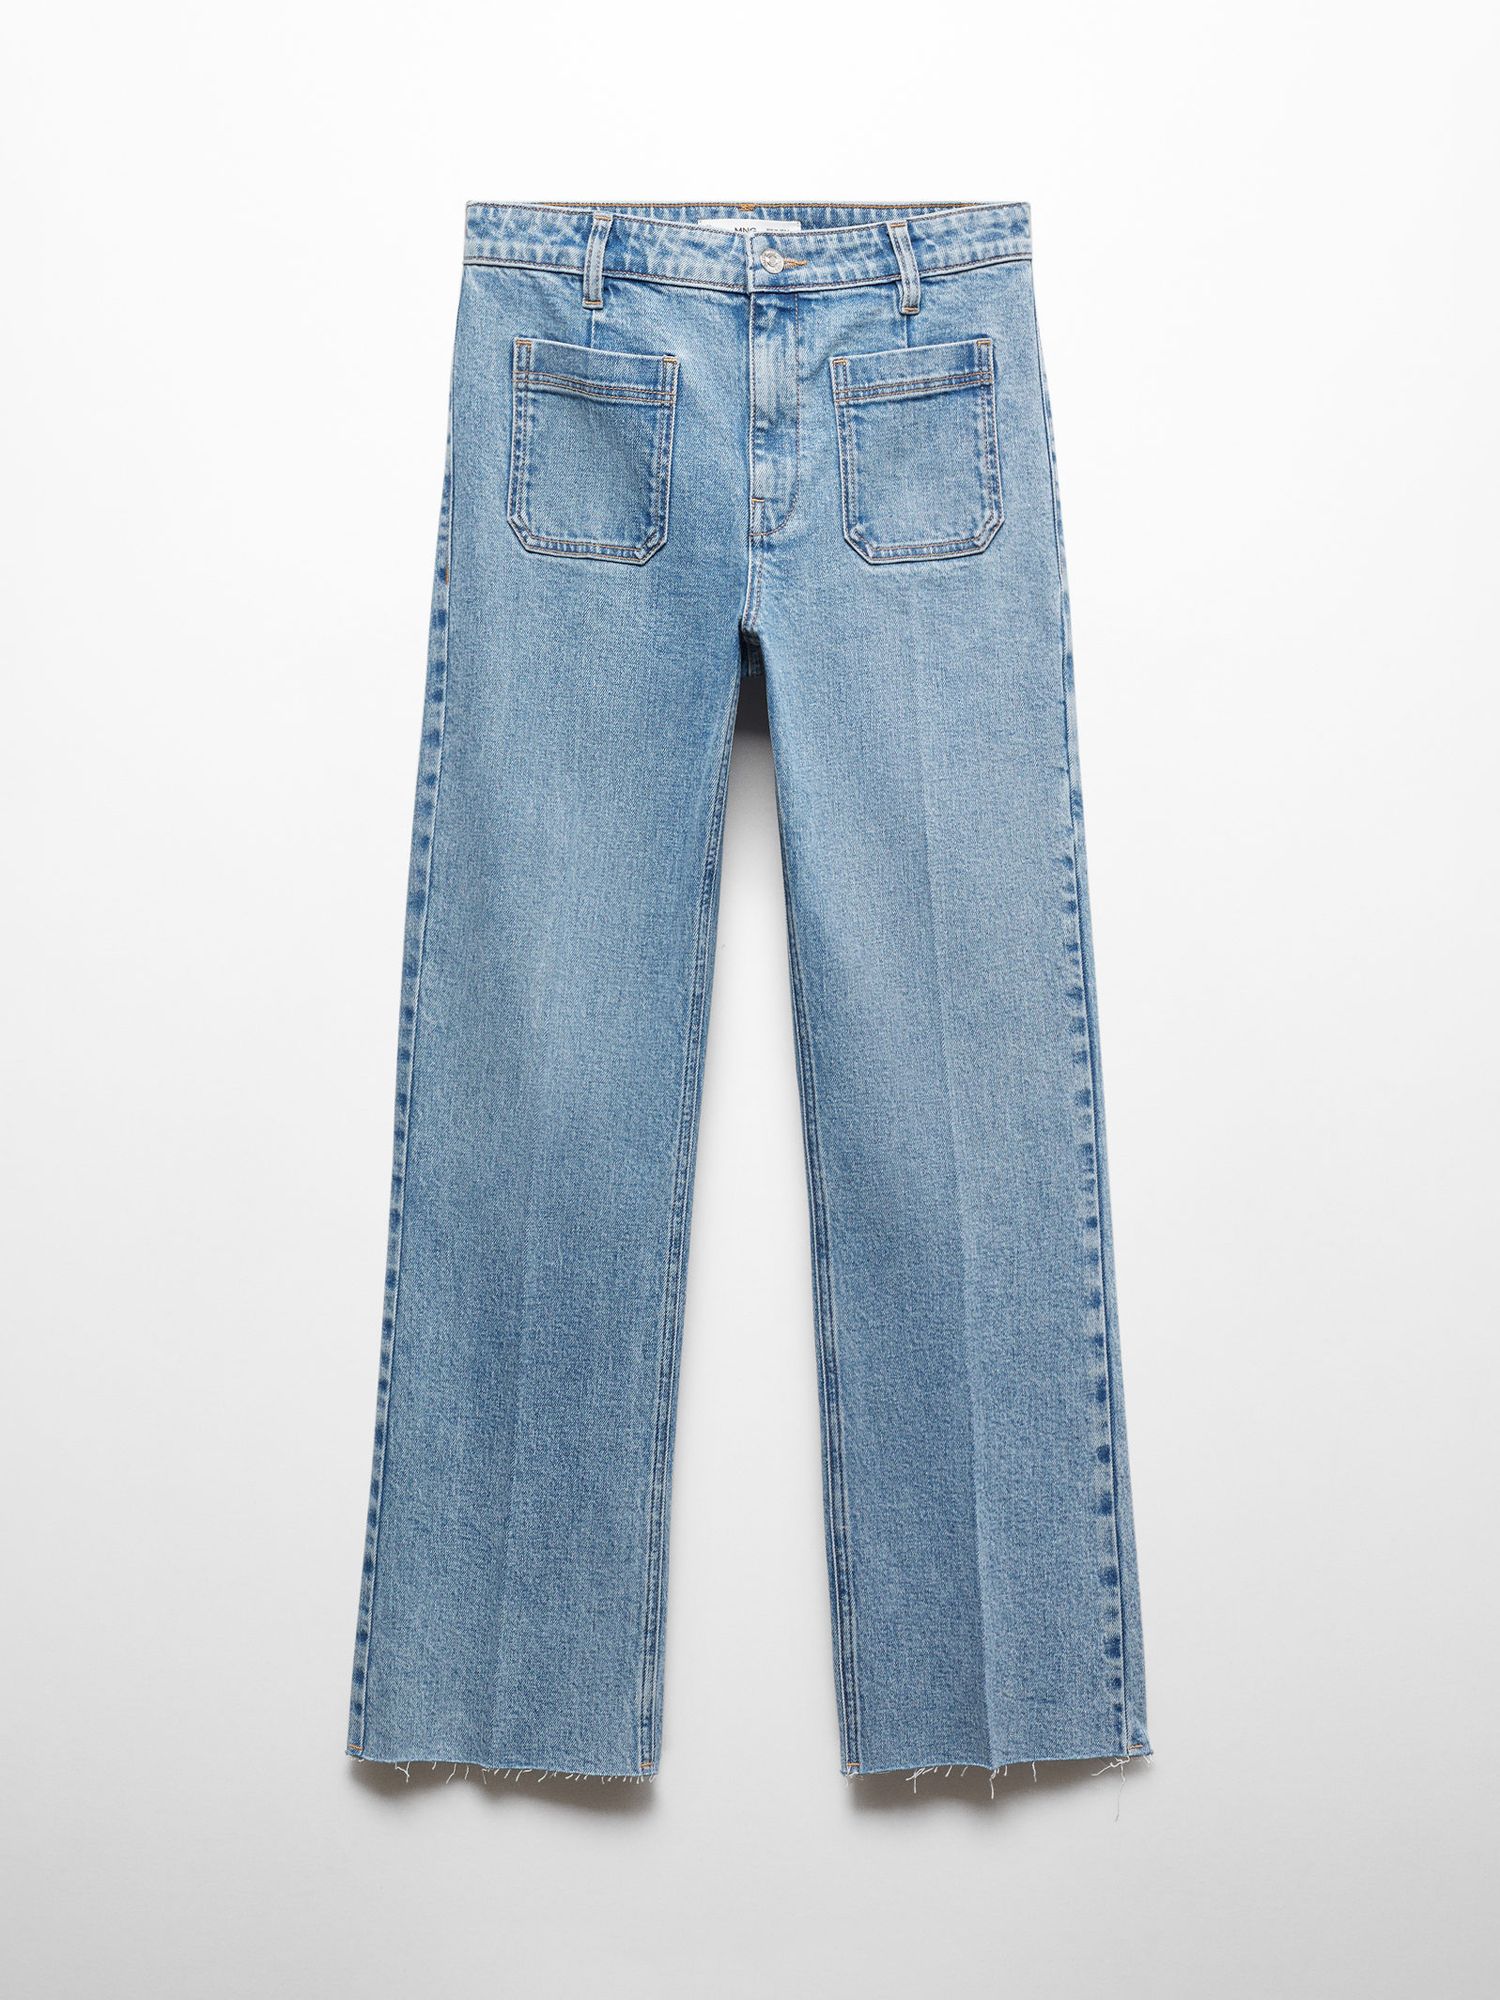 Mango Alex Cropped Jeans, Blue, 10